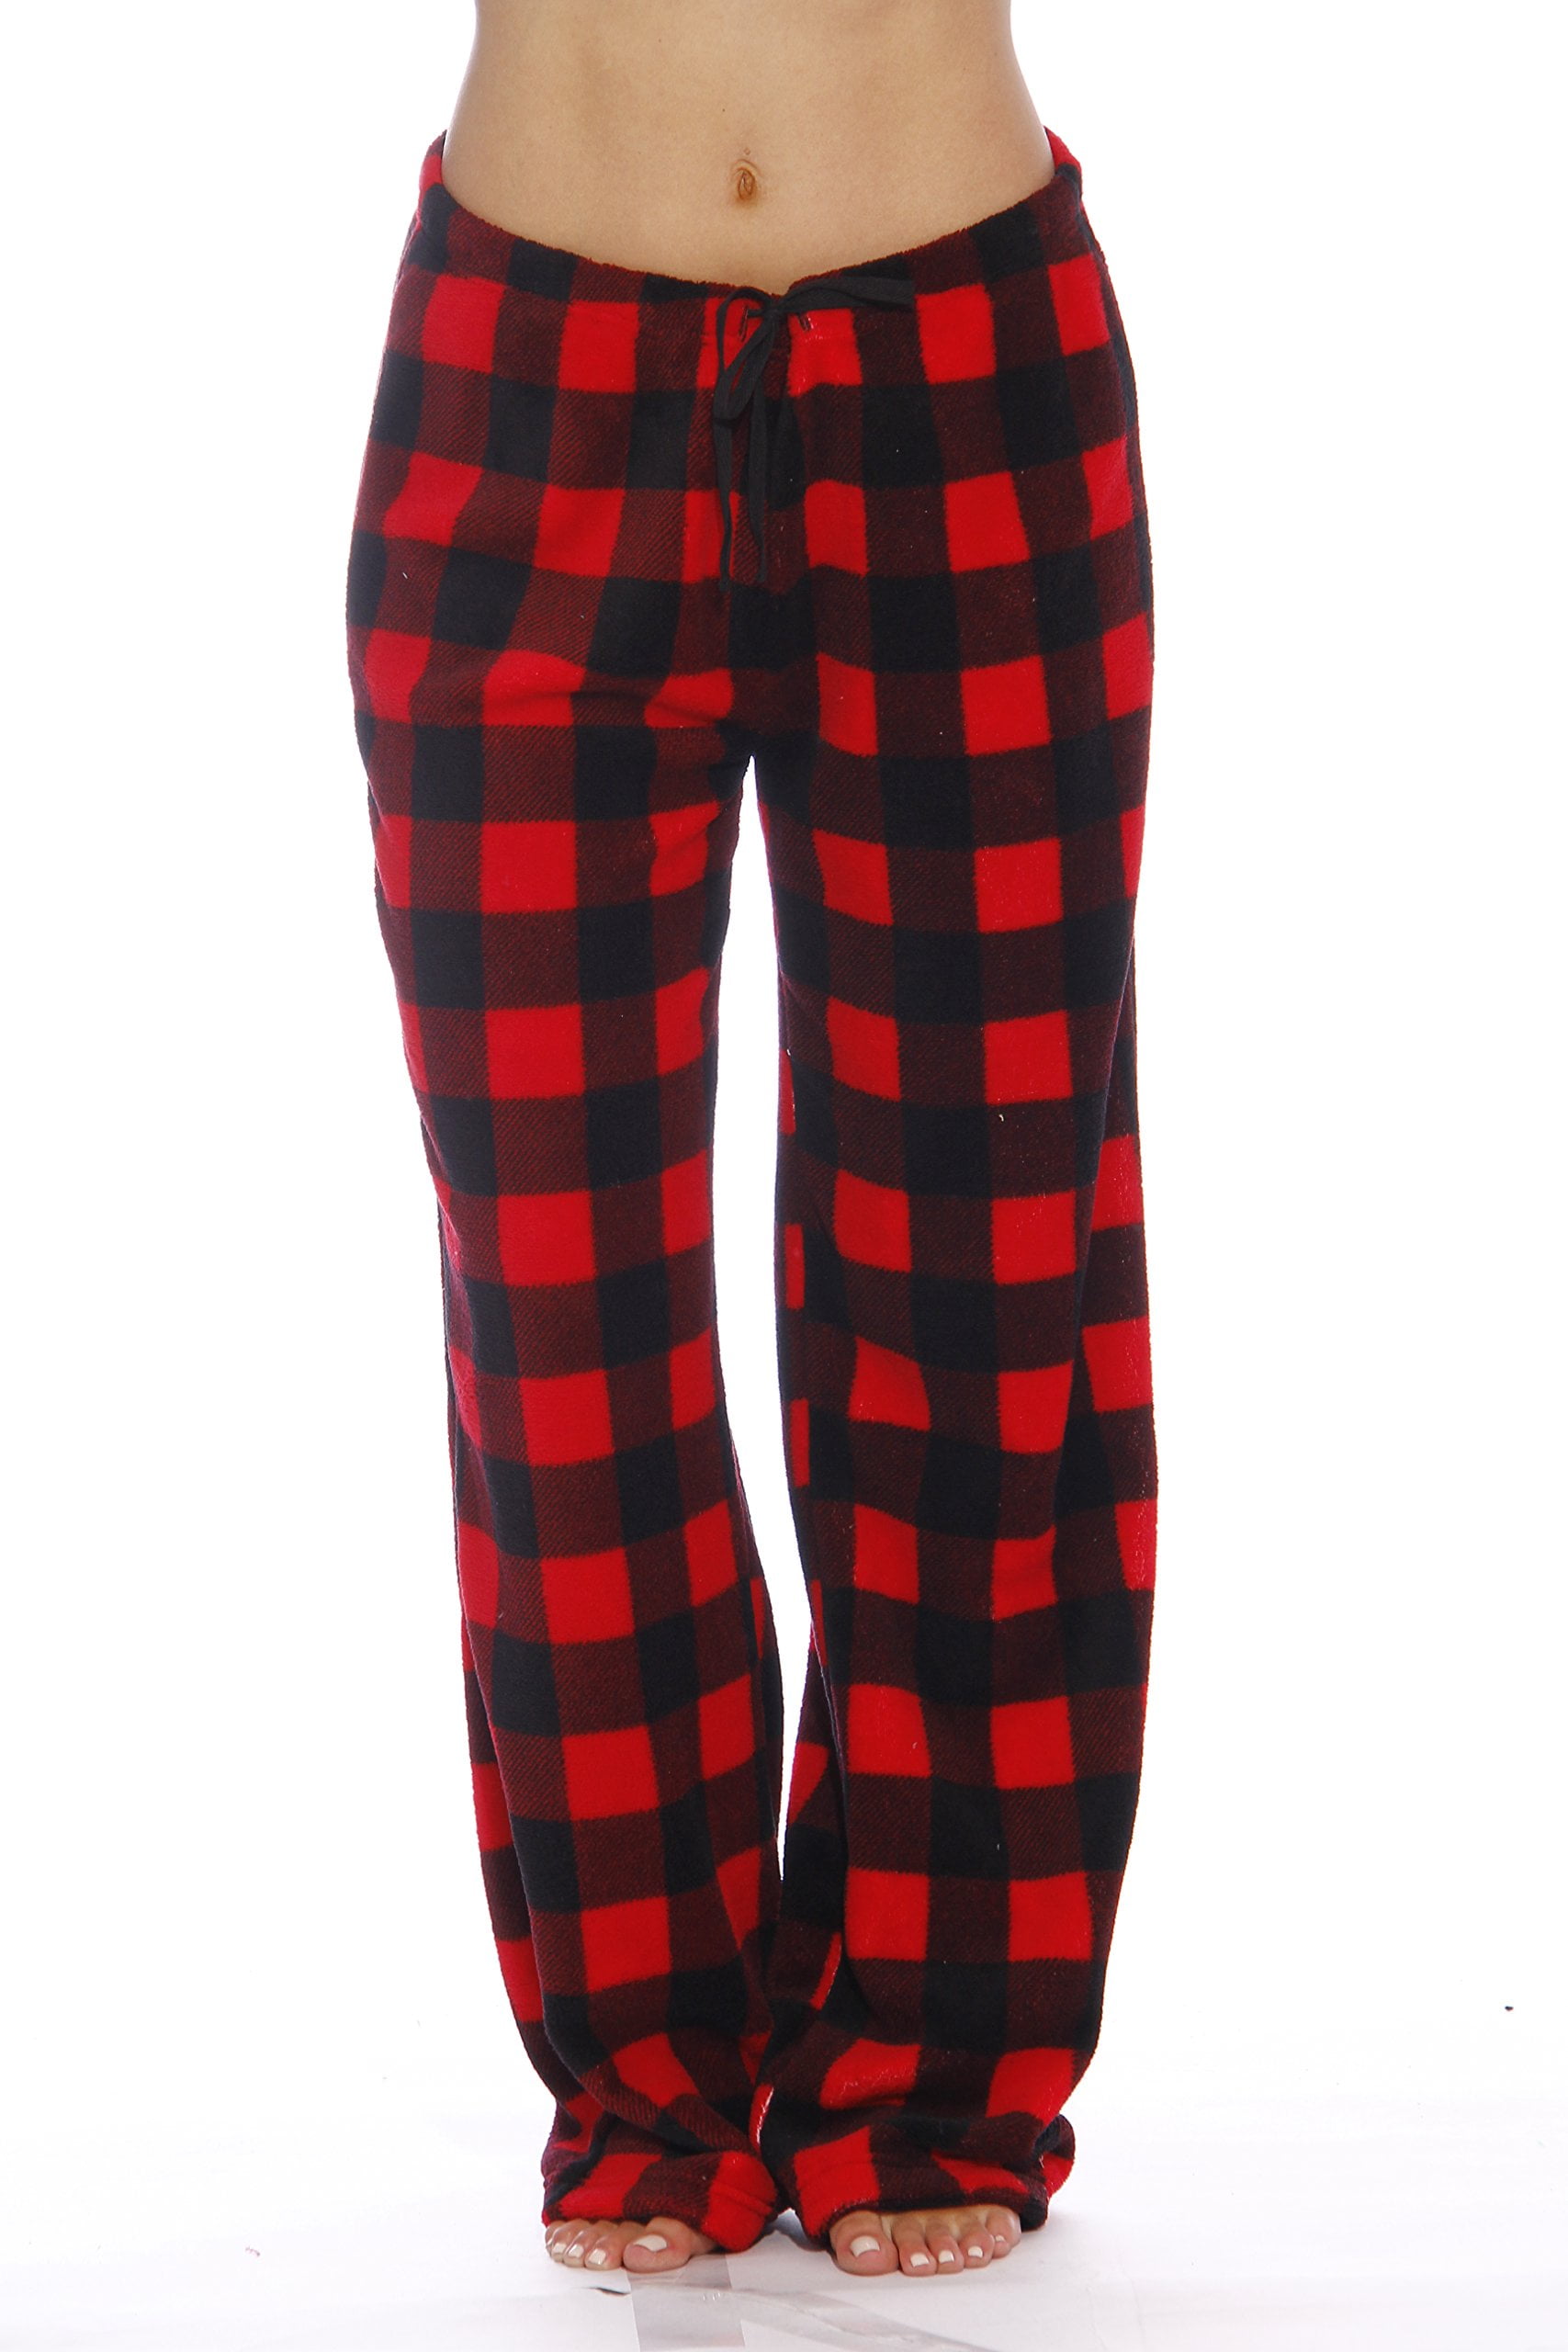 Just Love Women's Fleece Pajama Pants - Soft and Cozy Sleepwear Lounge PJs  (Buffalo Plaid Red, 1X)